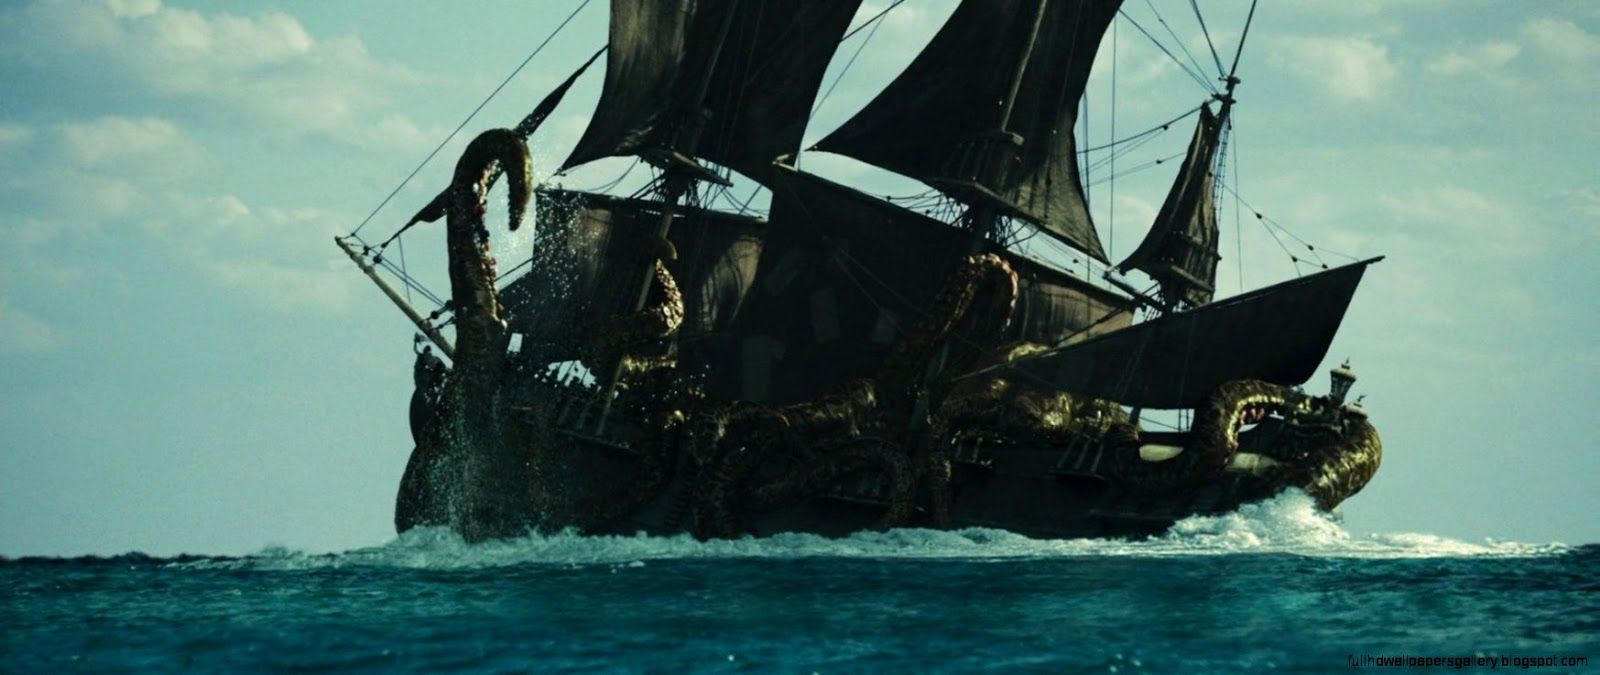 Pirates Caribbean Picture Black Pearl Ship. Full HD Wallpaper